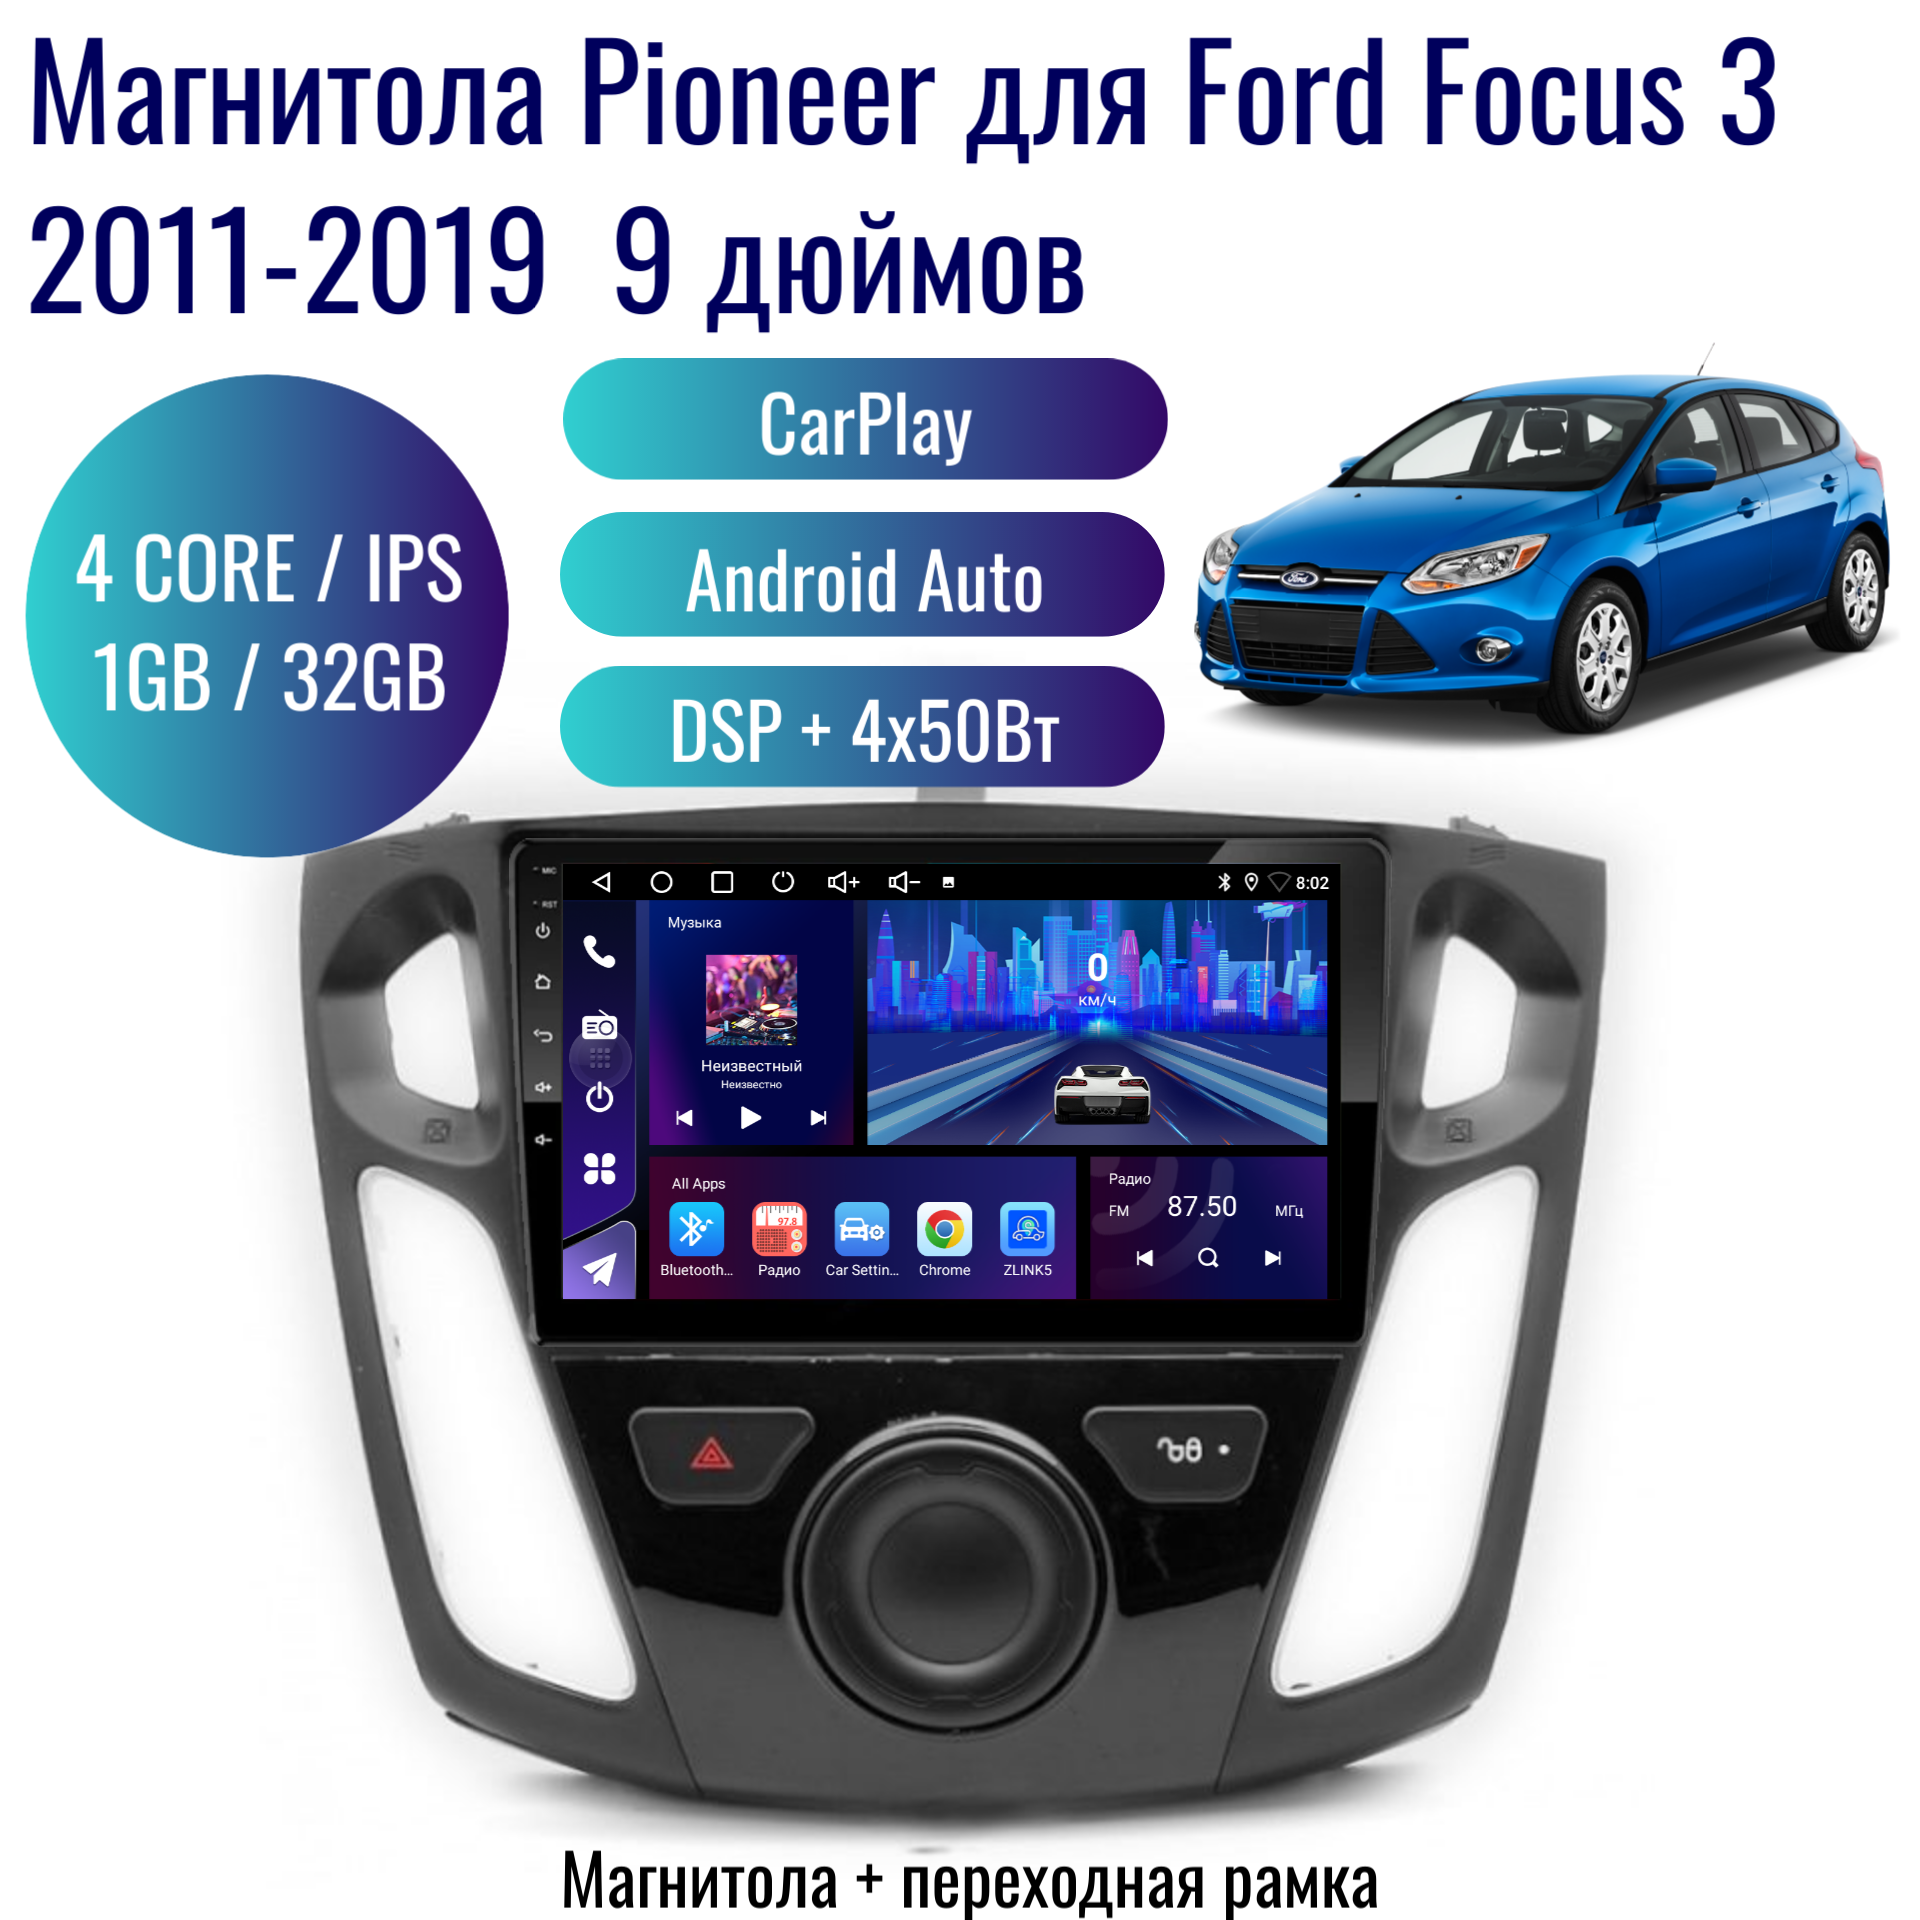 Автомагнитола Pioneer Android Ford Focus 3 2011-2019 / 4 ядер 1Gb+32Gb / 9 дюймов / GPS / Bluetooth / Wi-Fi / штатная магнитола / 2din / навигатор